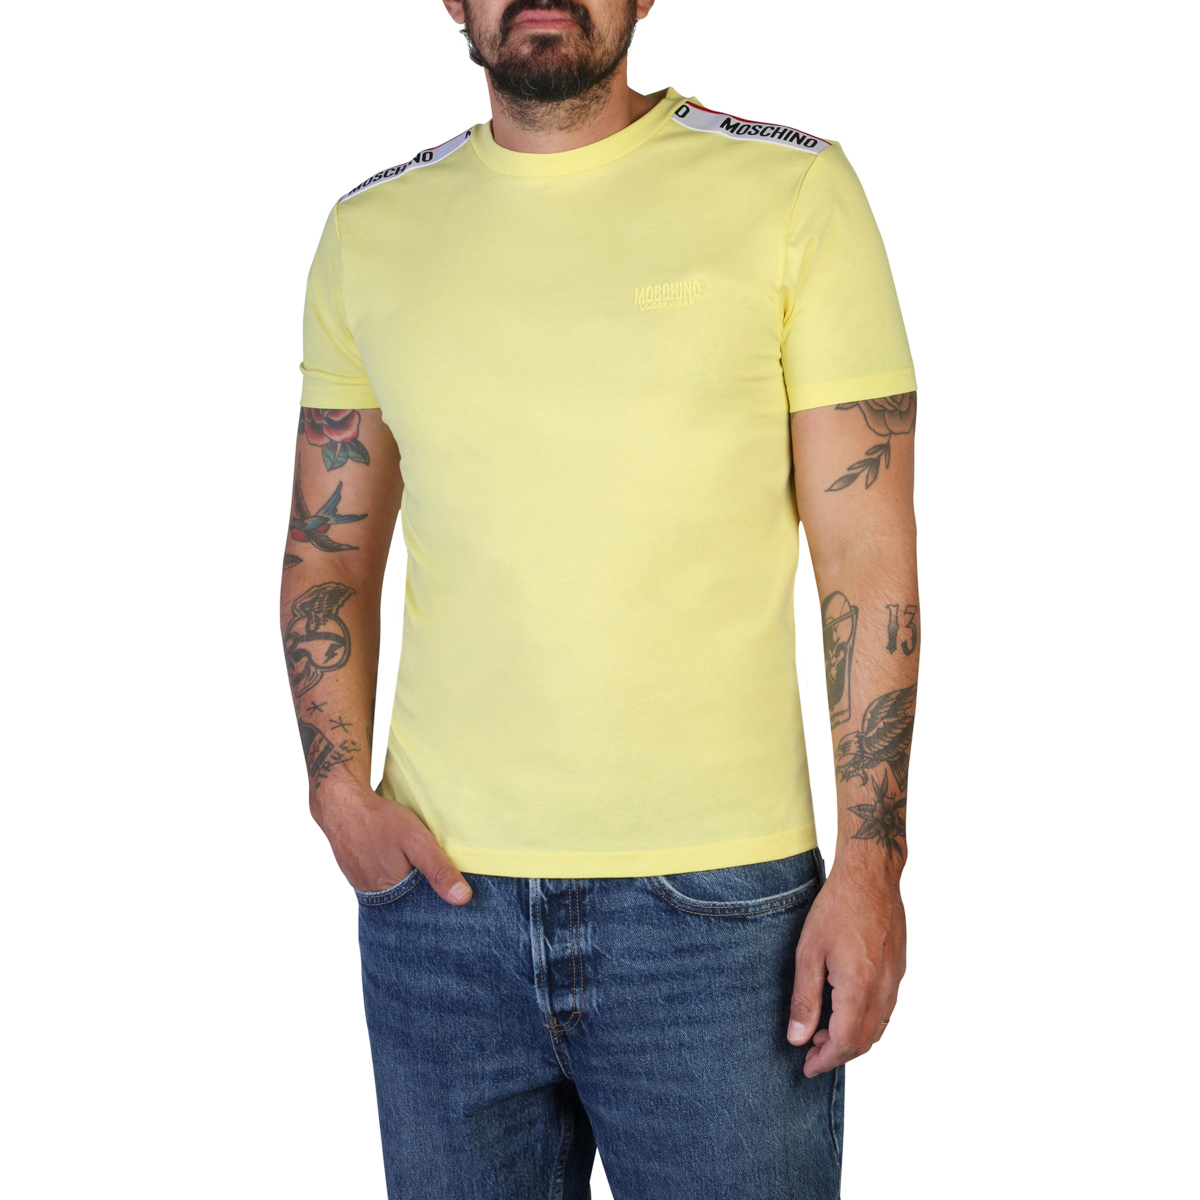 Moschino - T-shirt homme